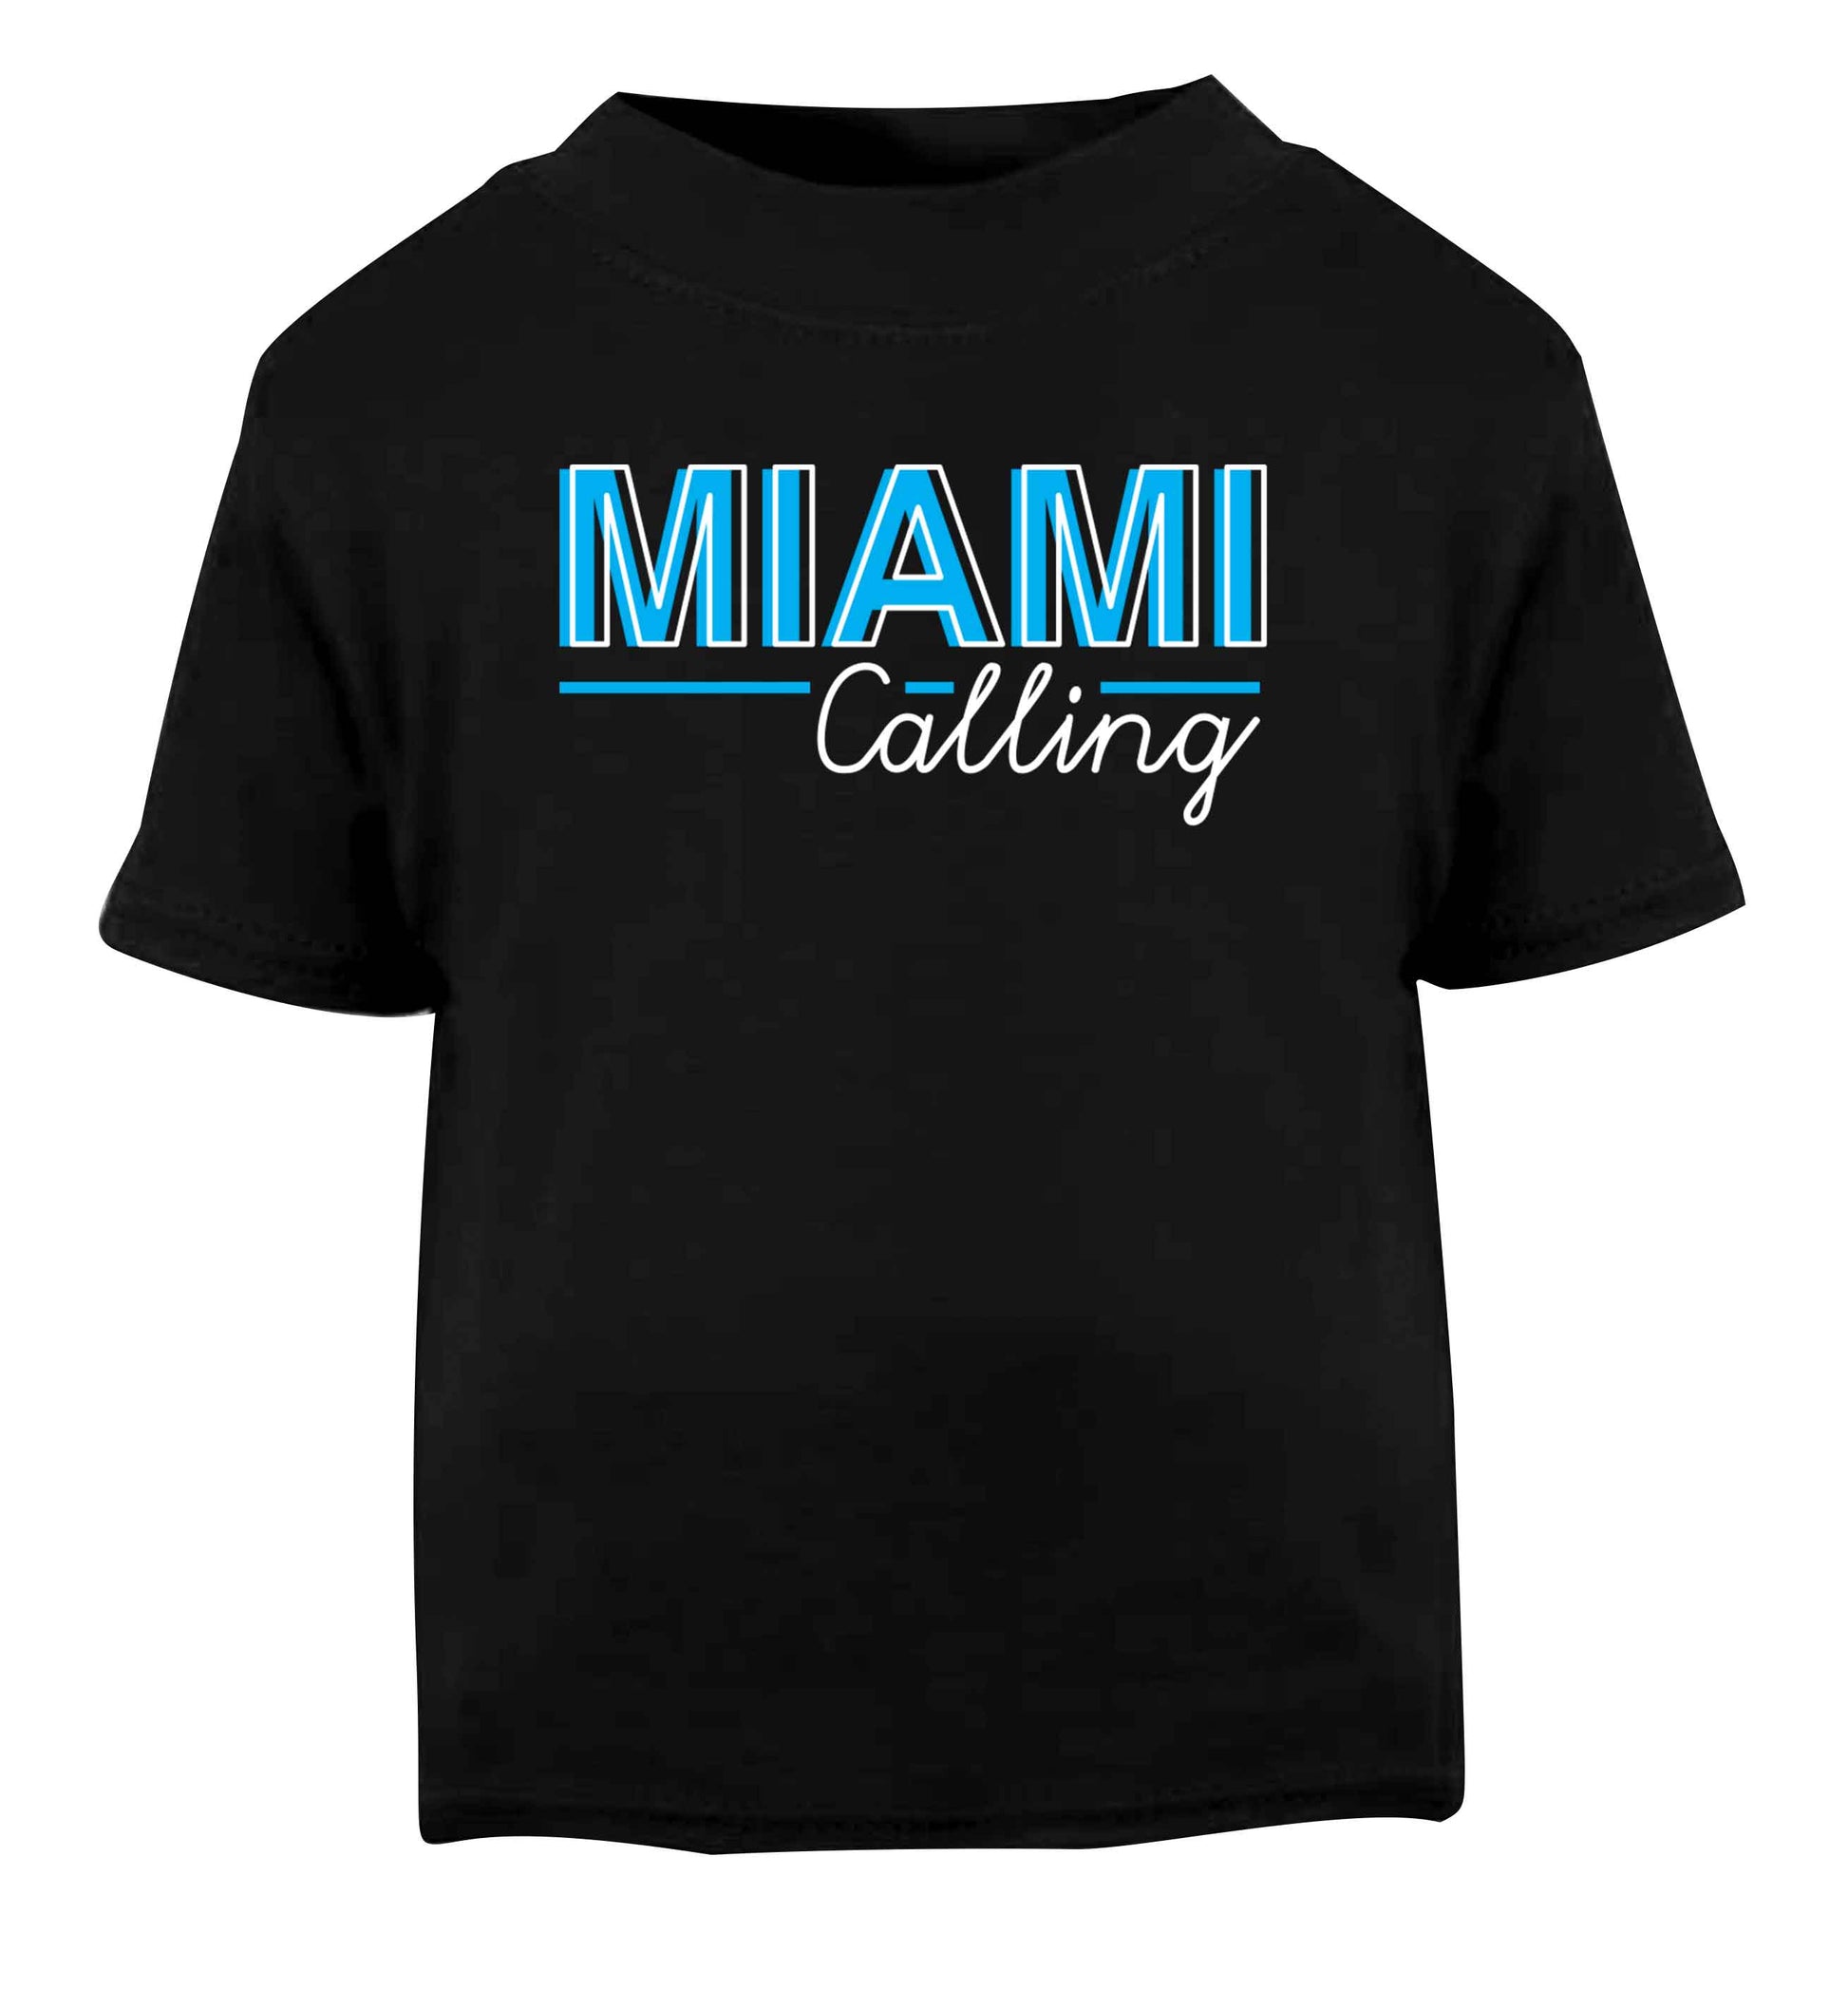 Miami calling Black Baby Toddler Tshirt 2 years